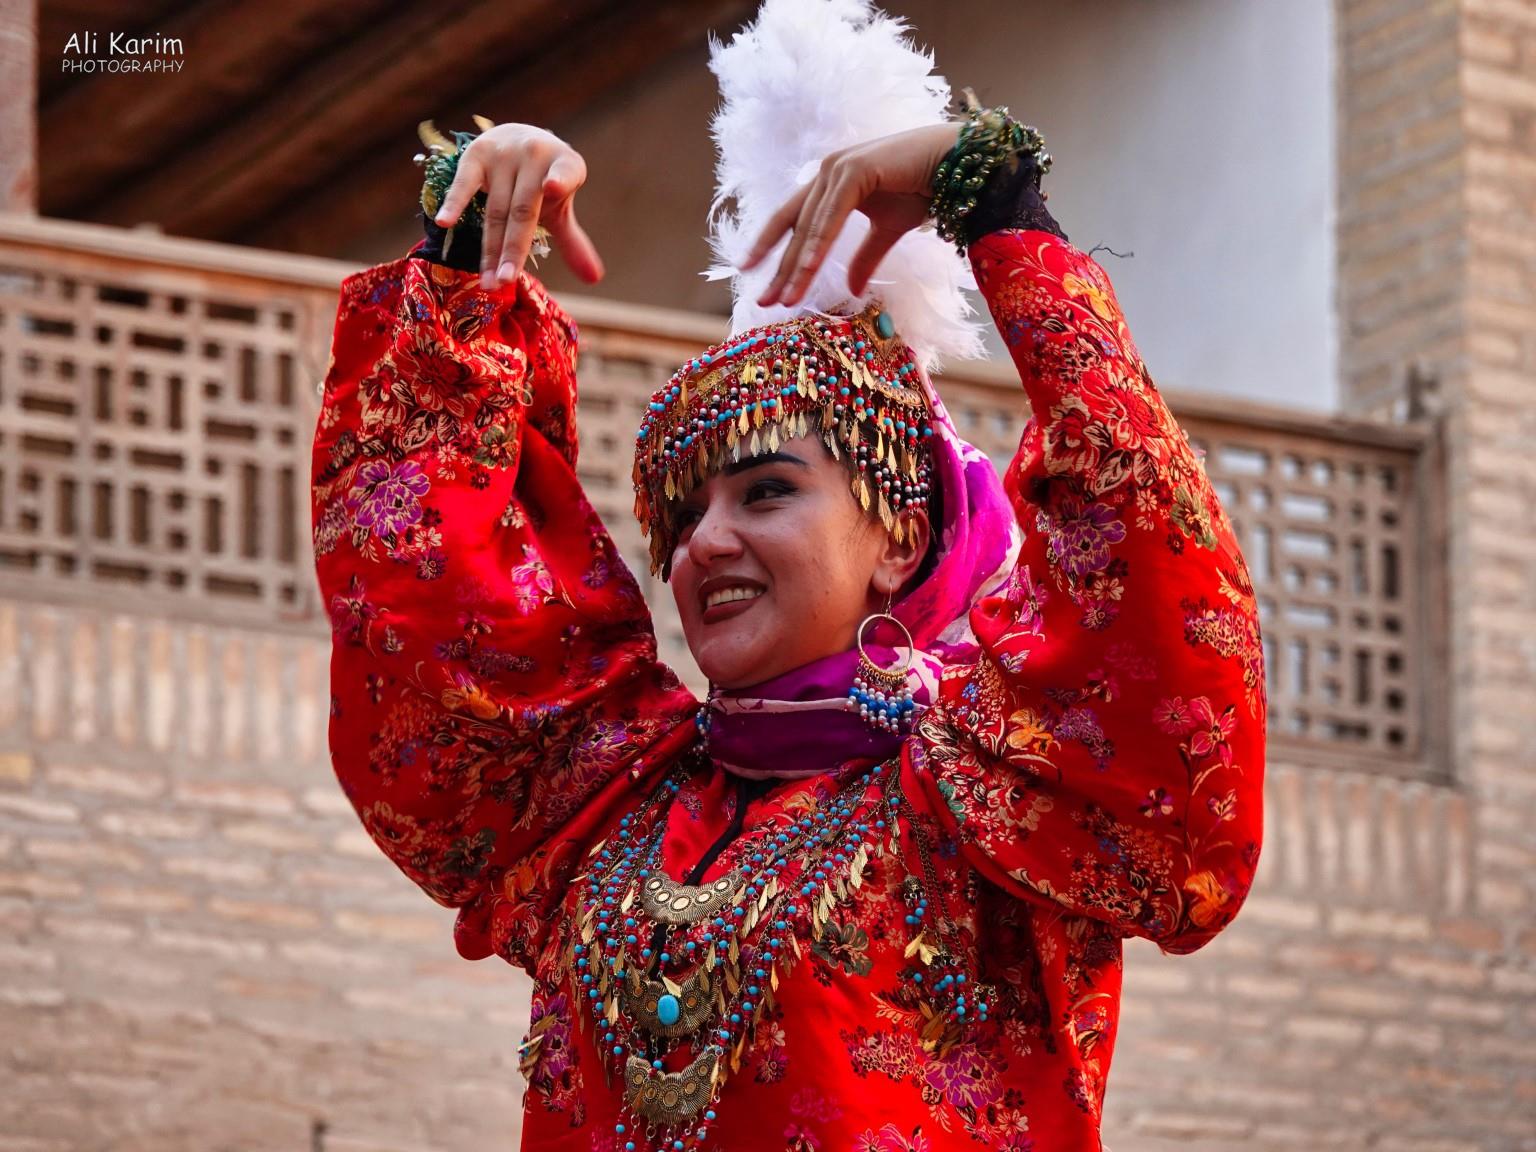 Khiva, Oct 2019, Dancer in beautiful traditional costume